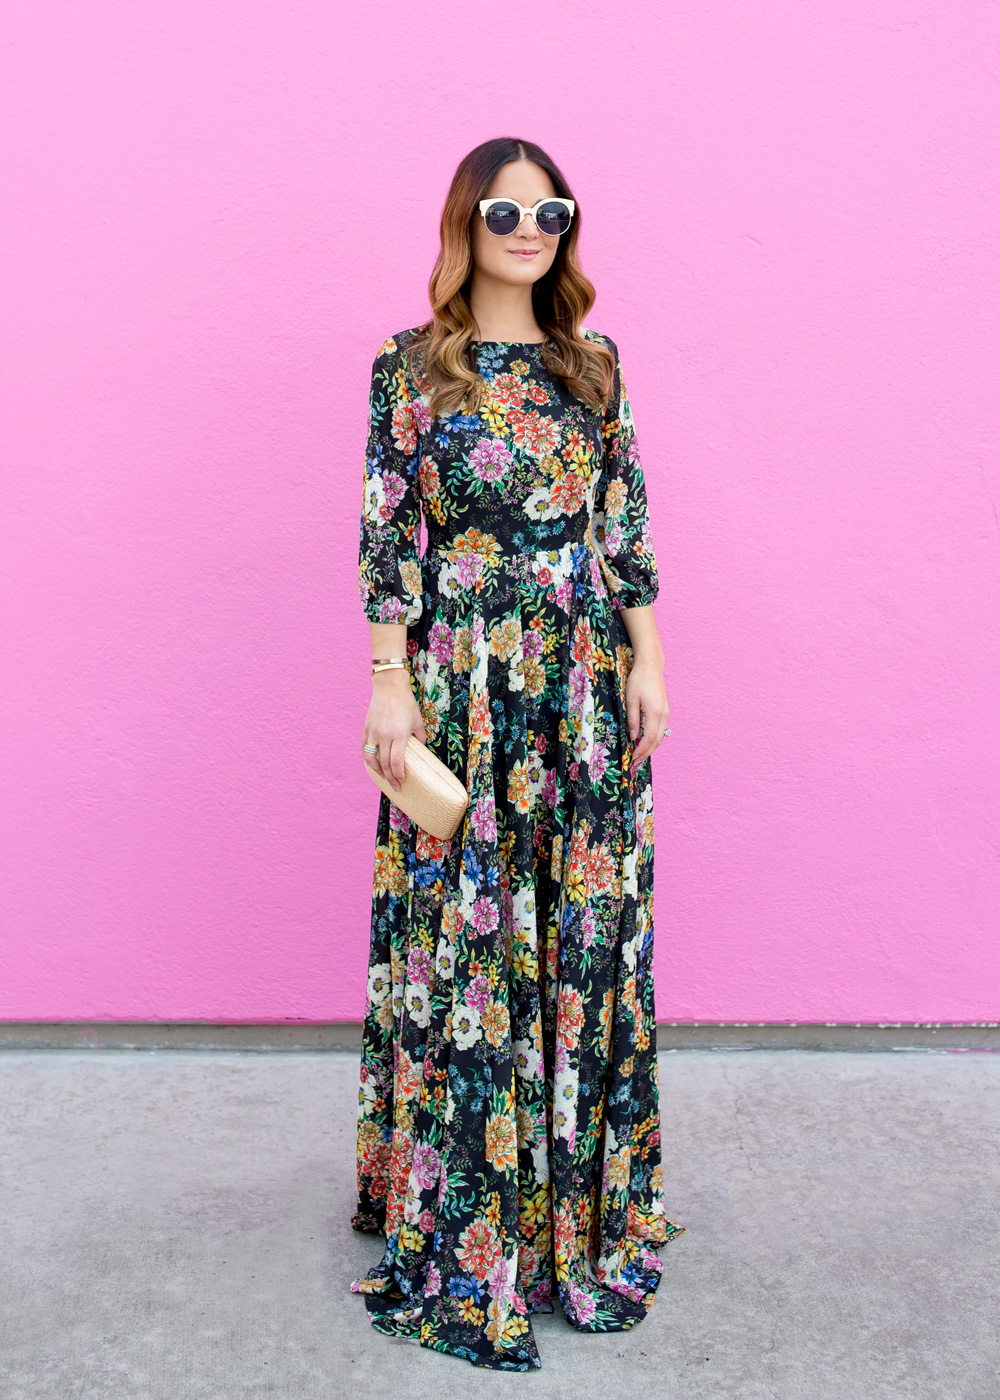 Fashion blogger pink wall Los Angeles